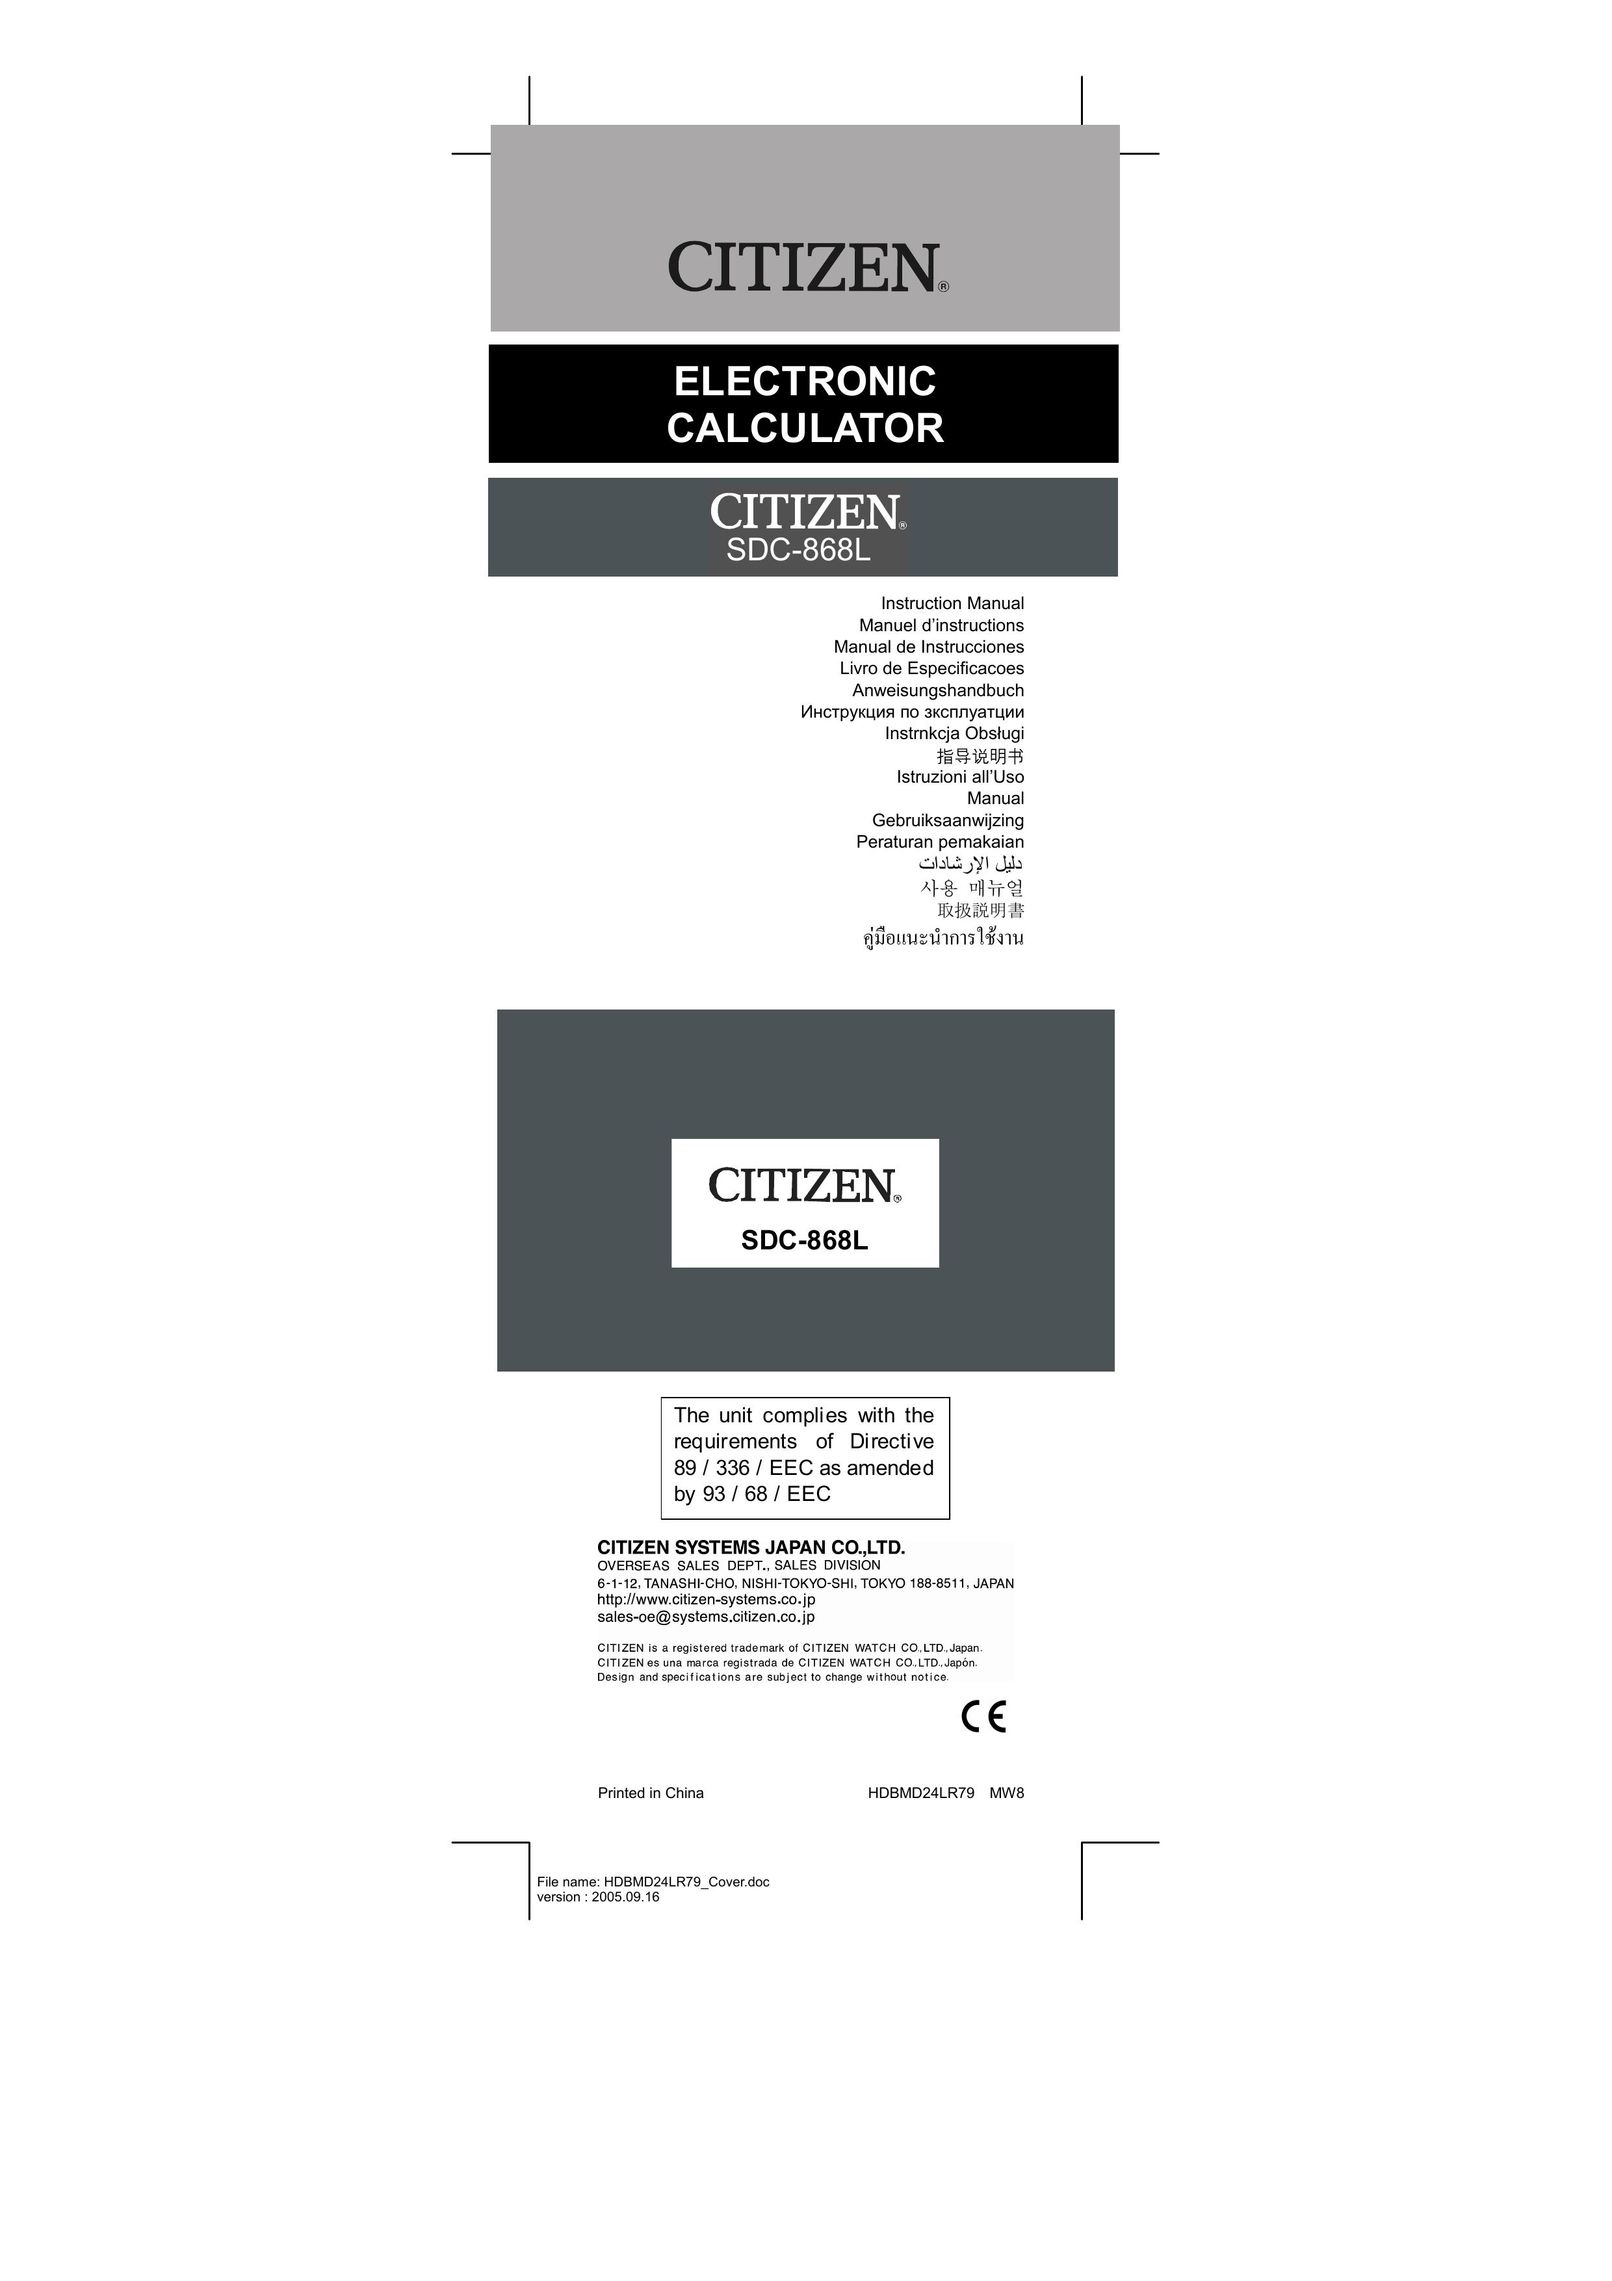 Citizen SDC-868L Calculator User Manual